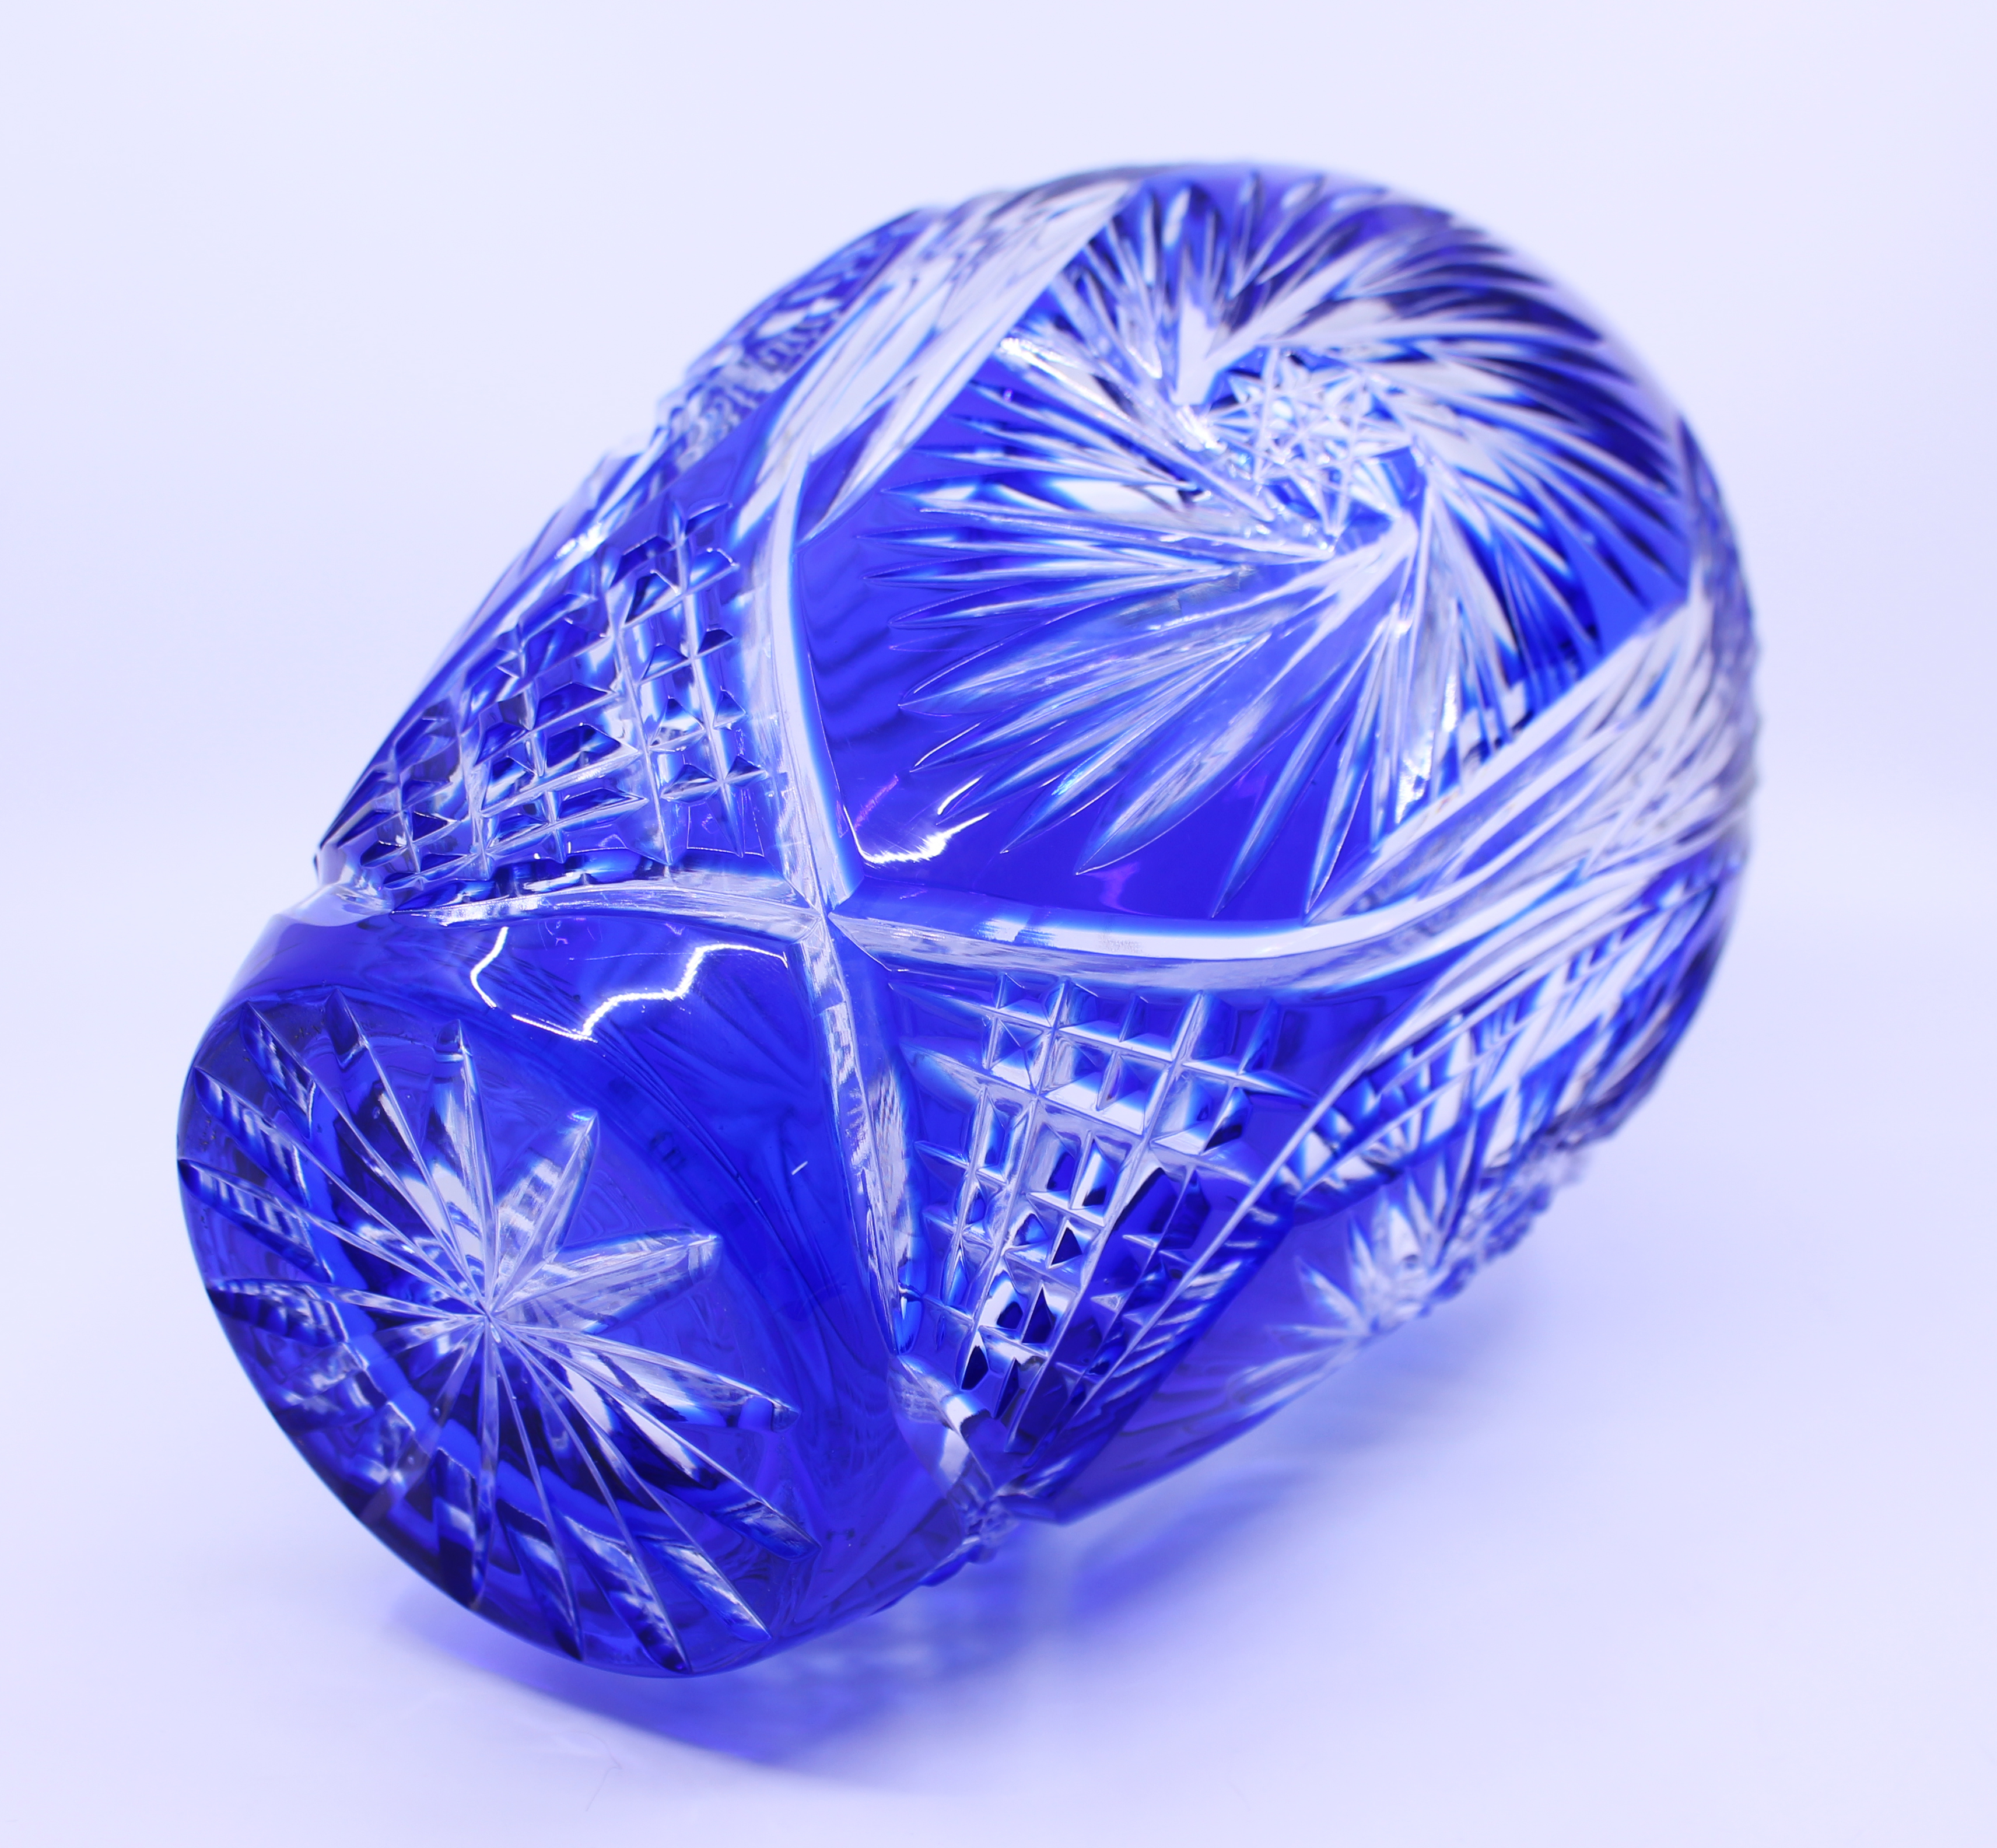 Bohemian Blue Overlay Crystal Ovoid Form Vase - Image 3 of 3